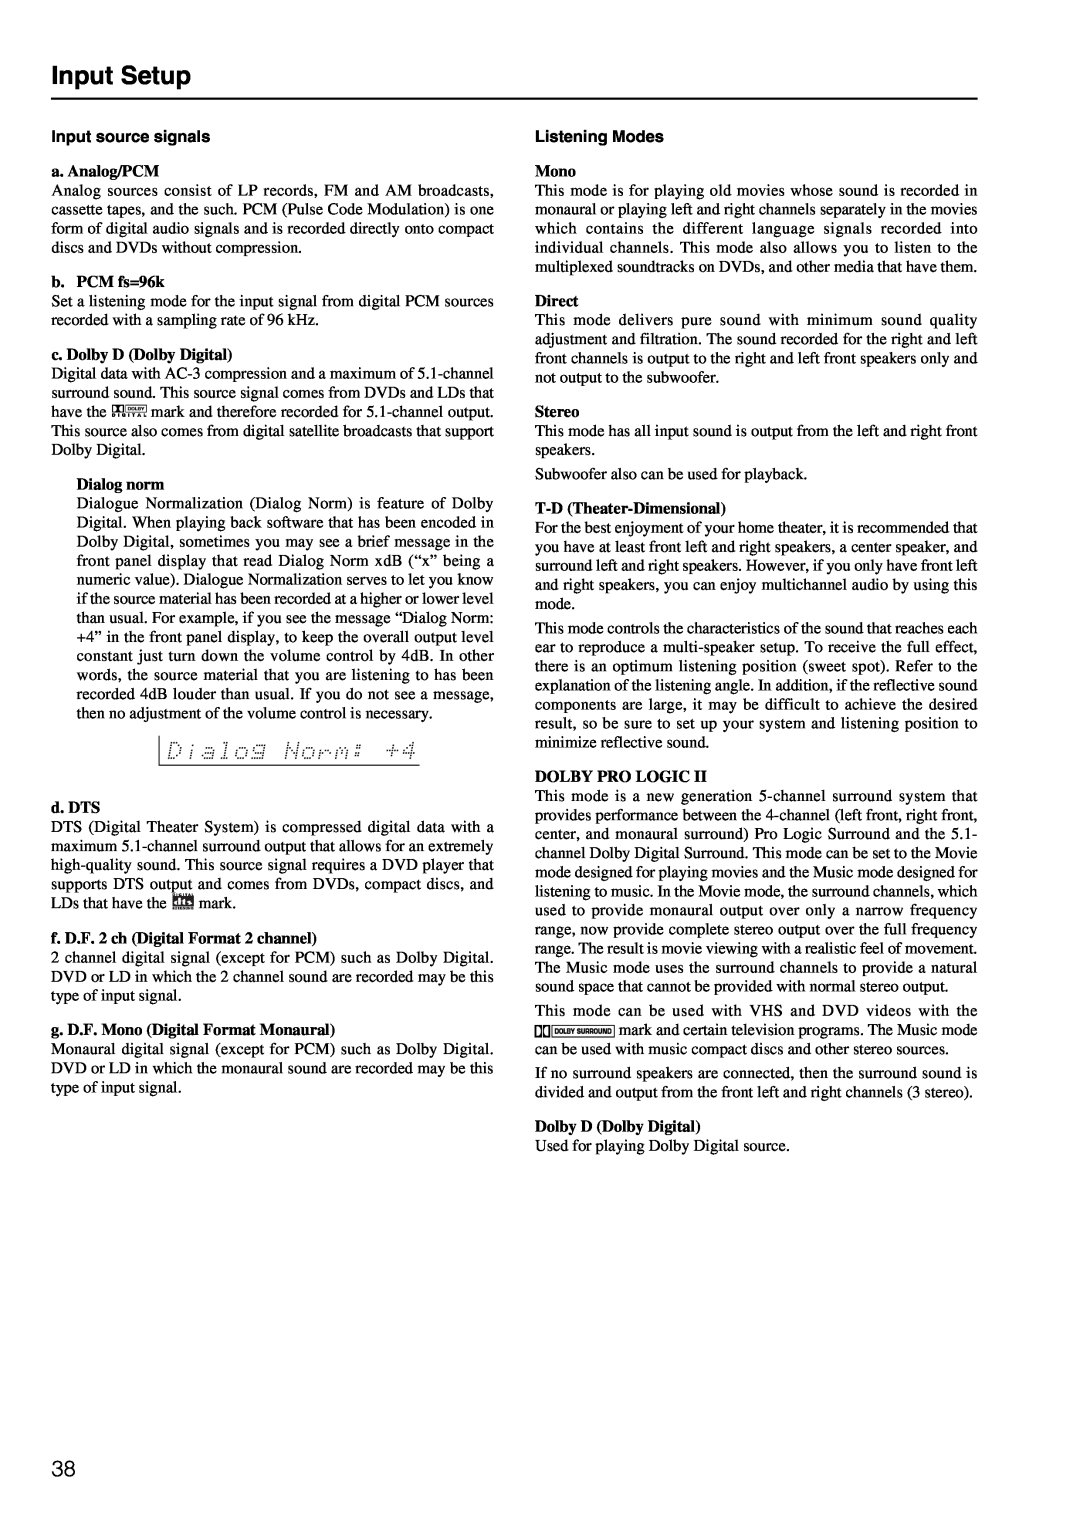 Onkyo TX-DS797 instruction manual Input Setup, a. Analog/PCM 